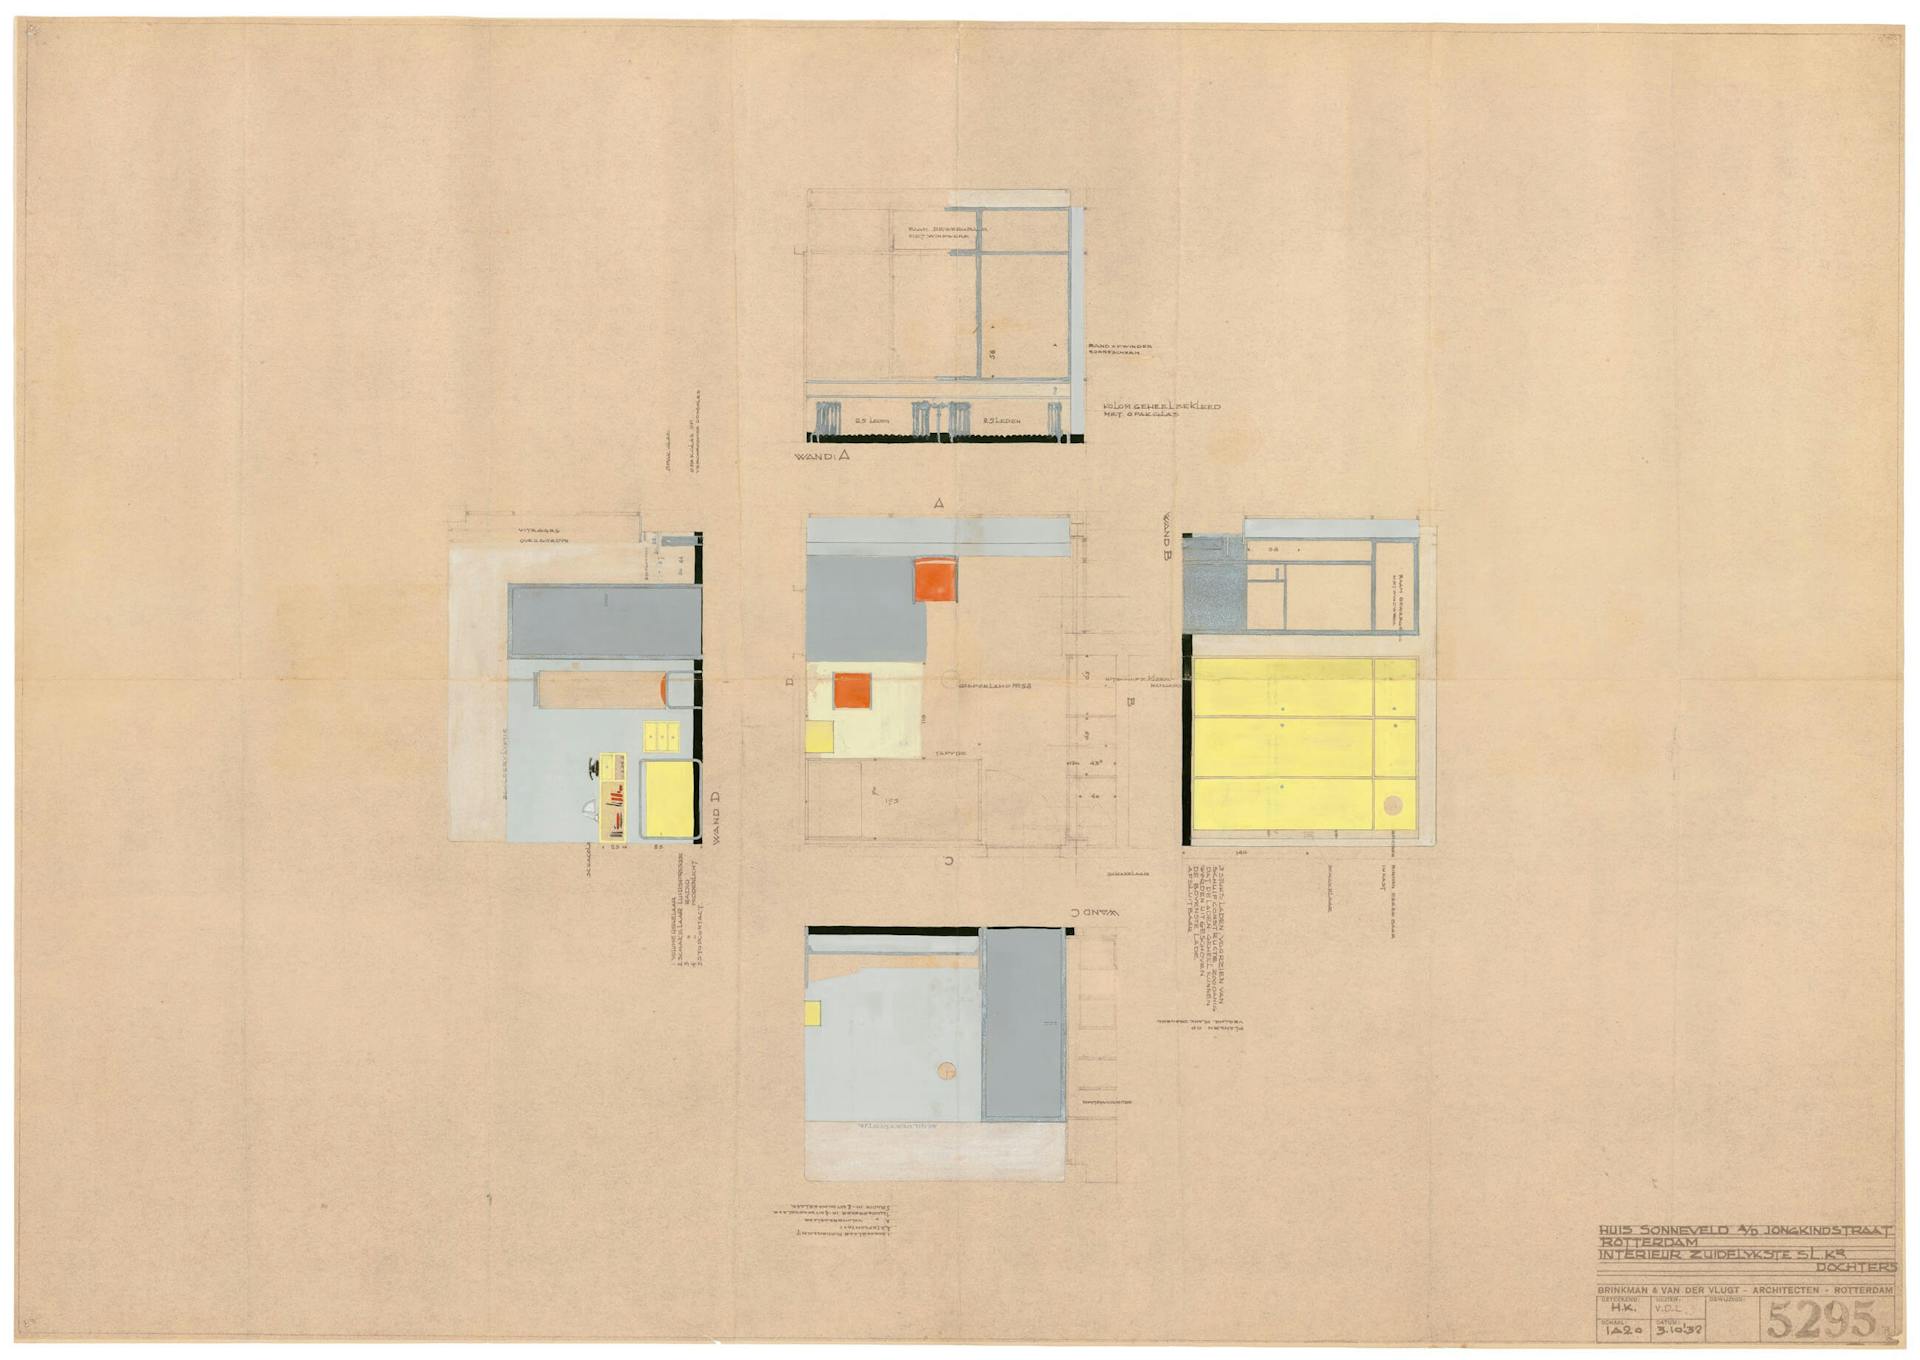 J.A. Brinkman en L.C. van der Vlugt. Interieur slaapkamer dochters, Huis Sonneveld, 1932 